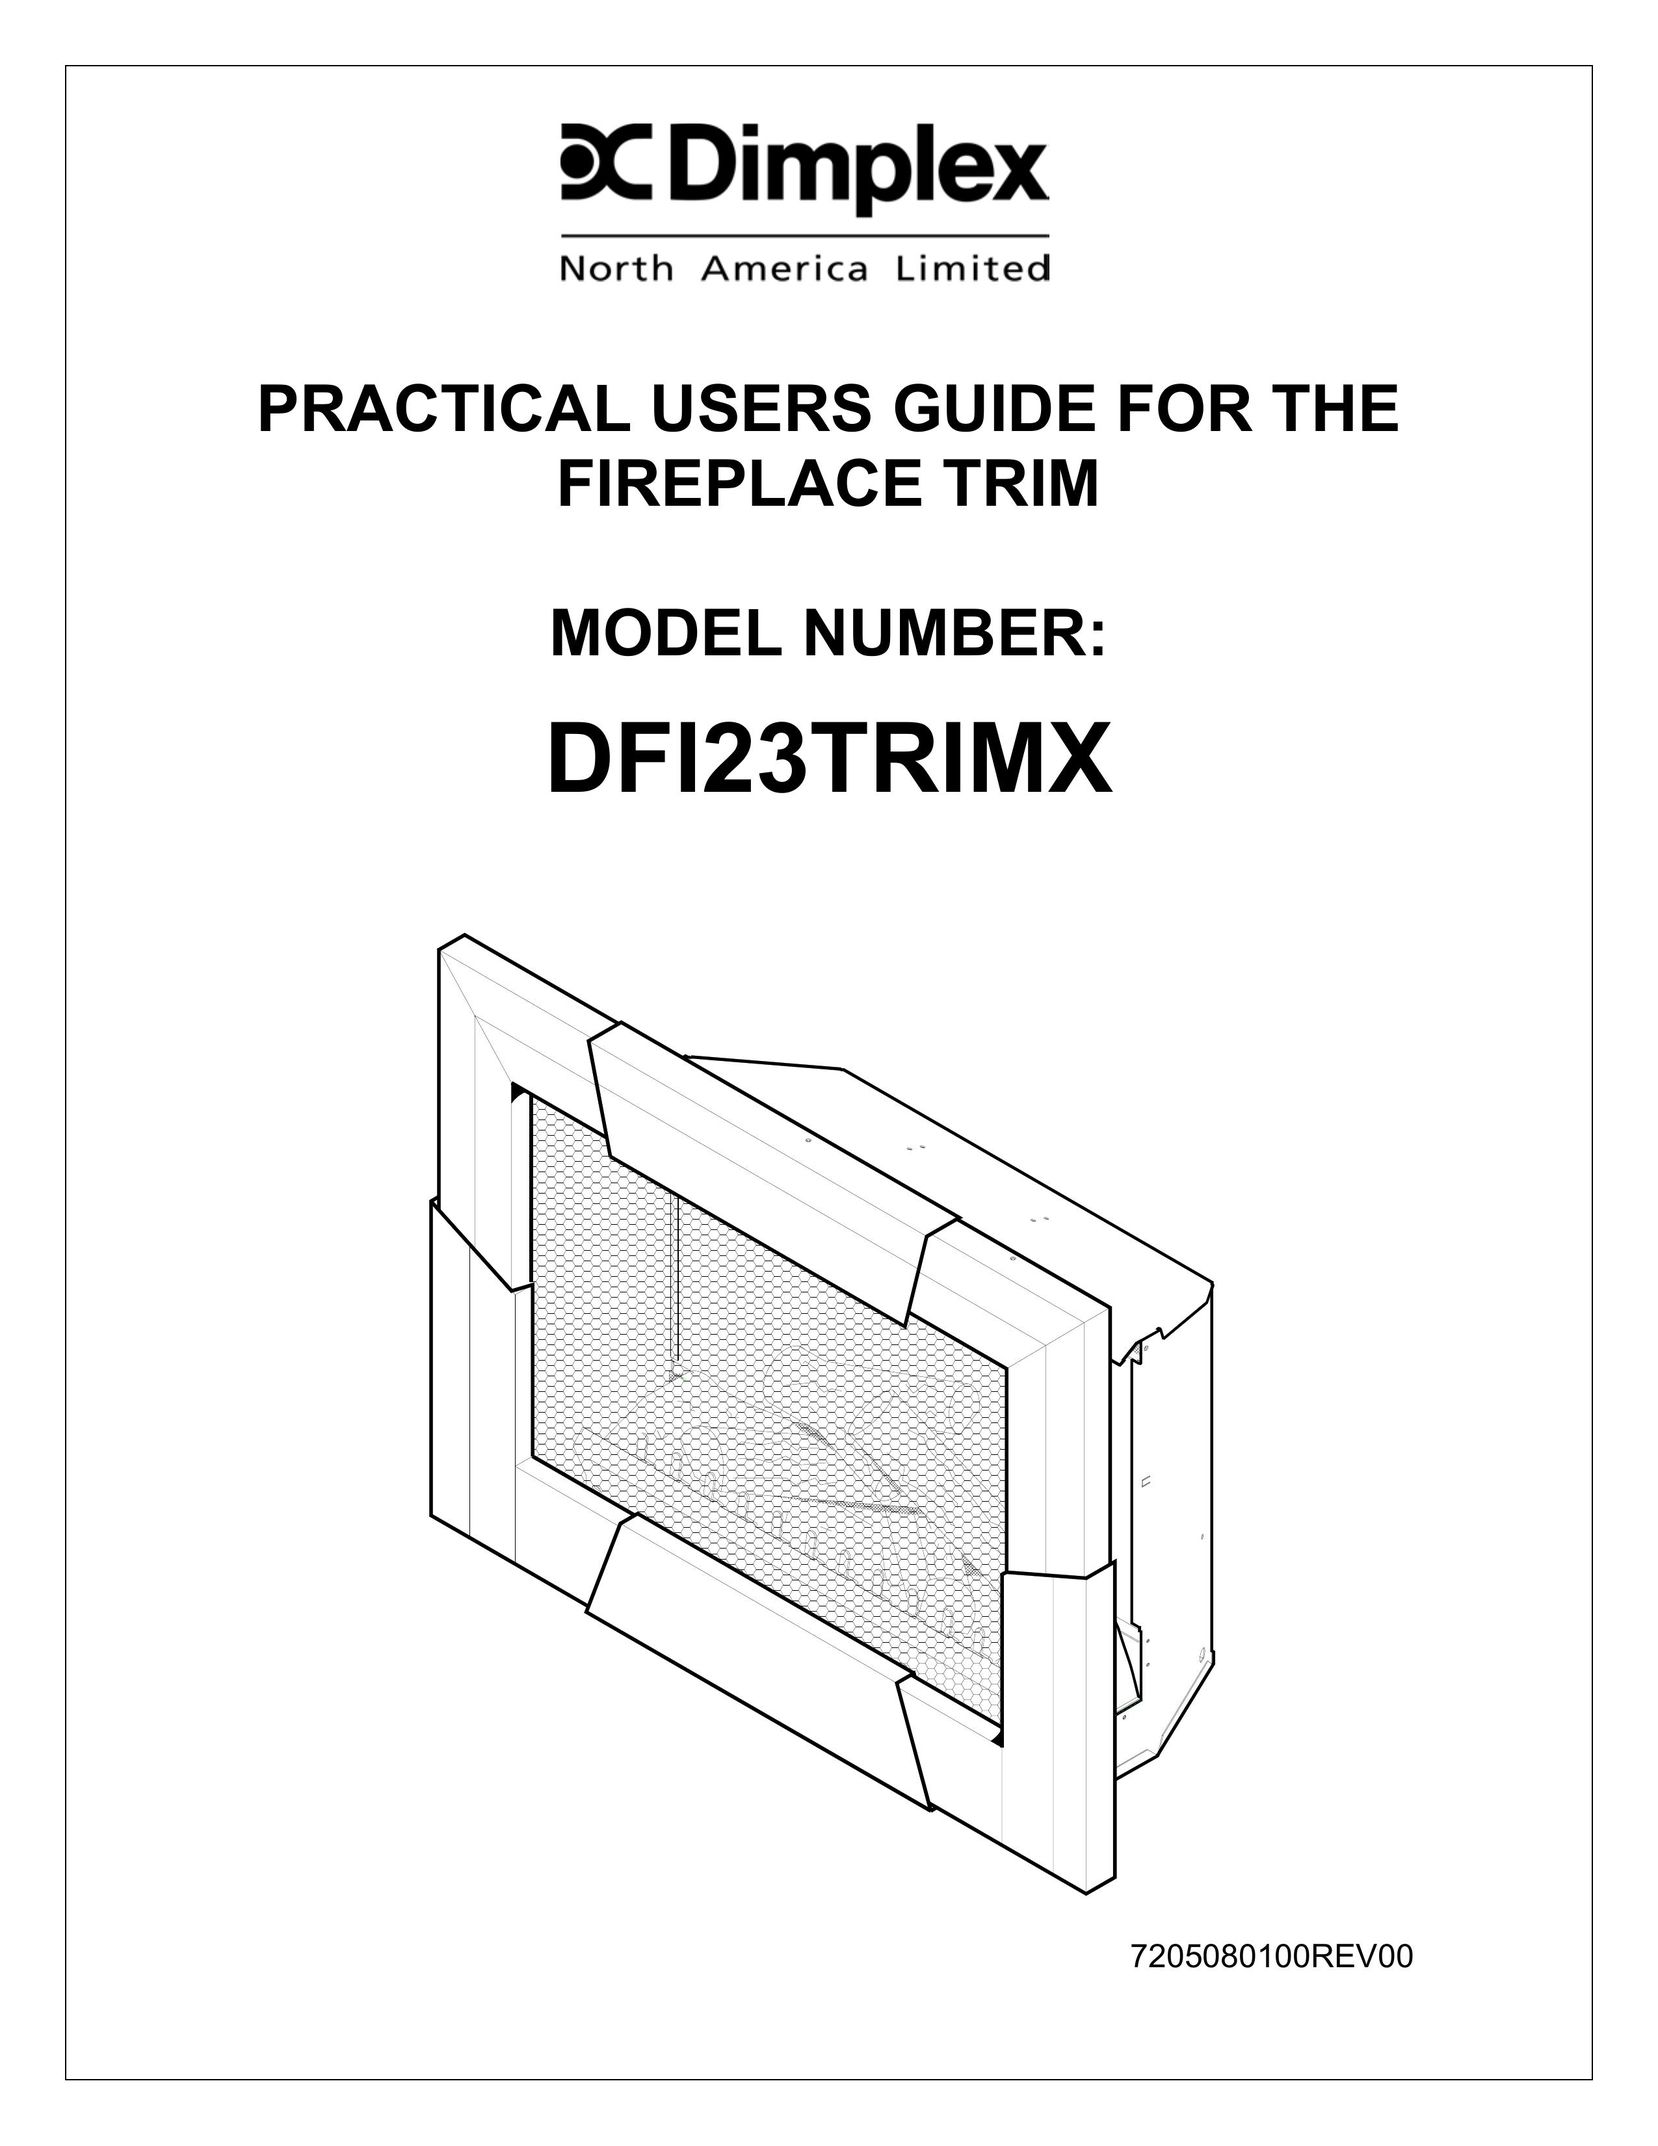 Dimplex DFI23TRIMX Indoor Fireplace User Manual